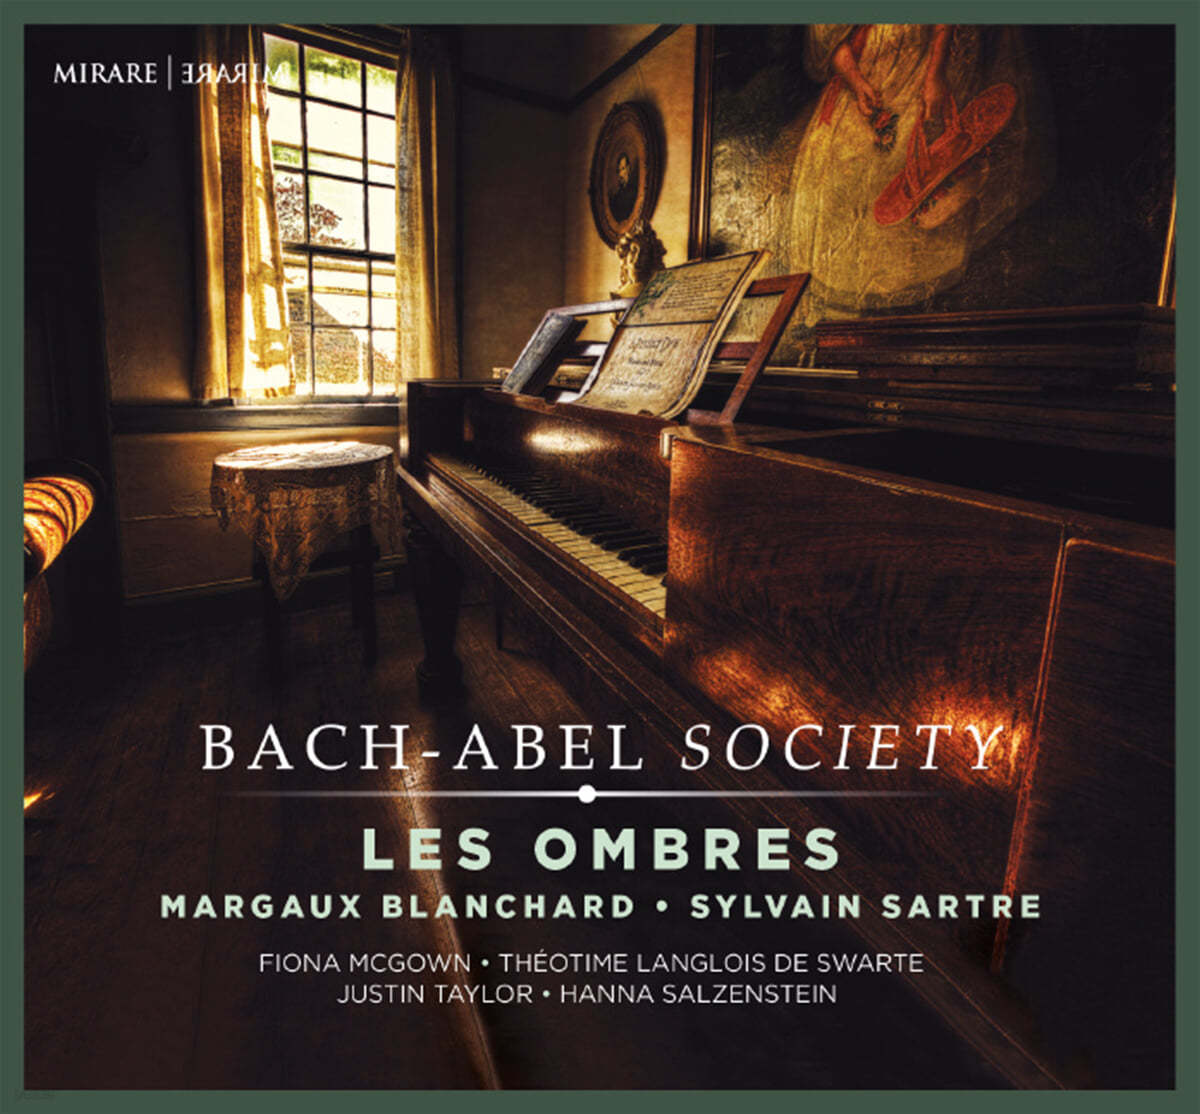 Les Ombres J.C.바흐와 아벨의 콘서트 (Bach-Abel Society)